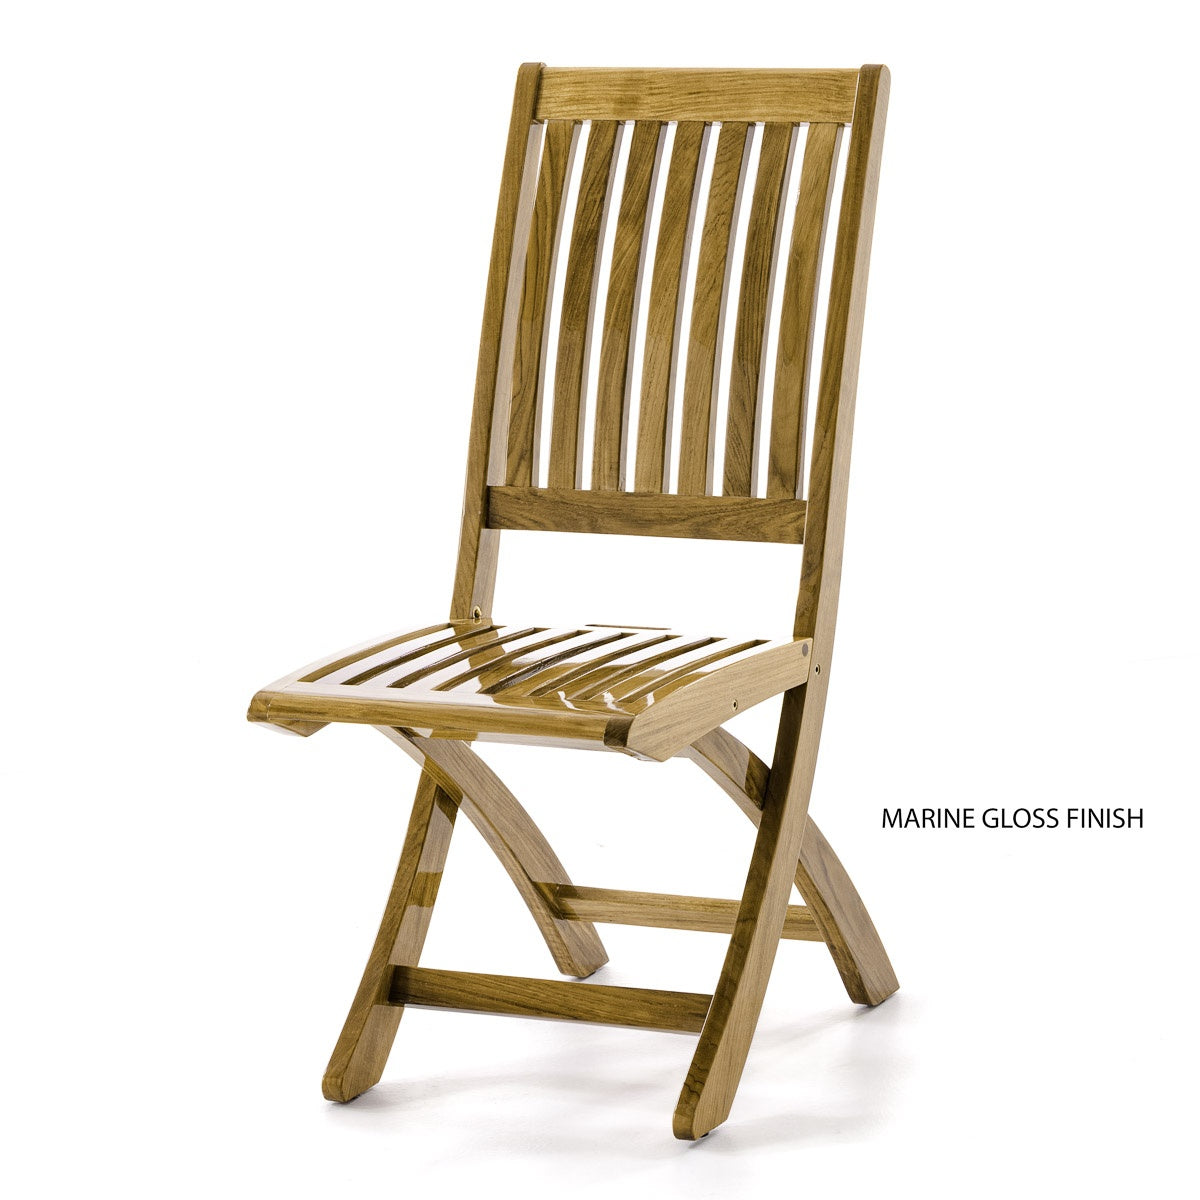 Westminster Teak - Barbuda Teak Folding Chair Replaced by 11602S - 11602